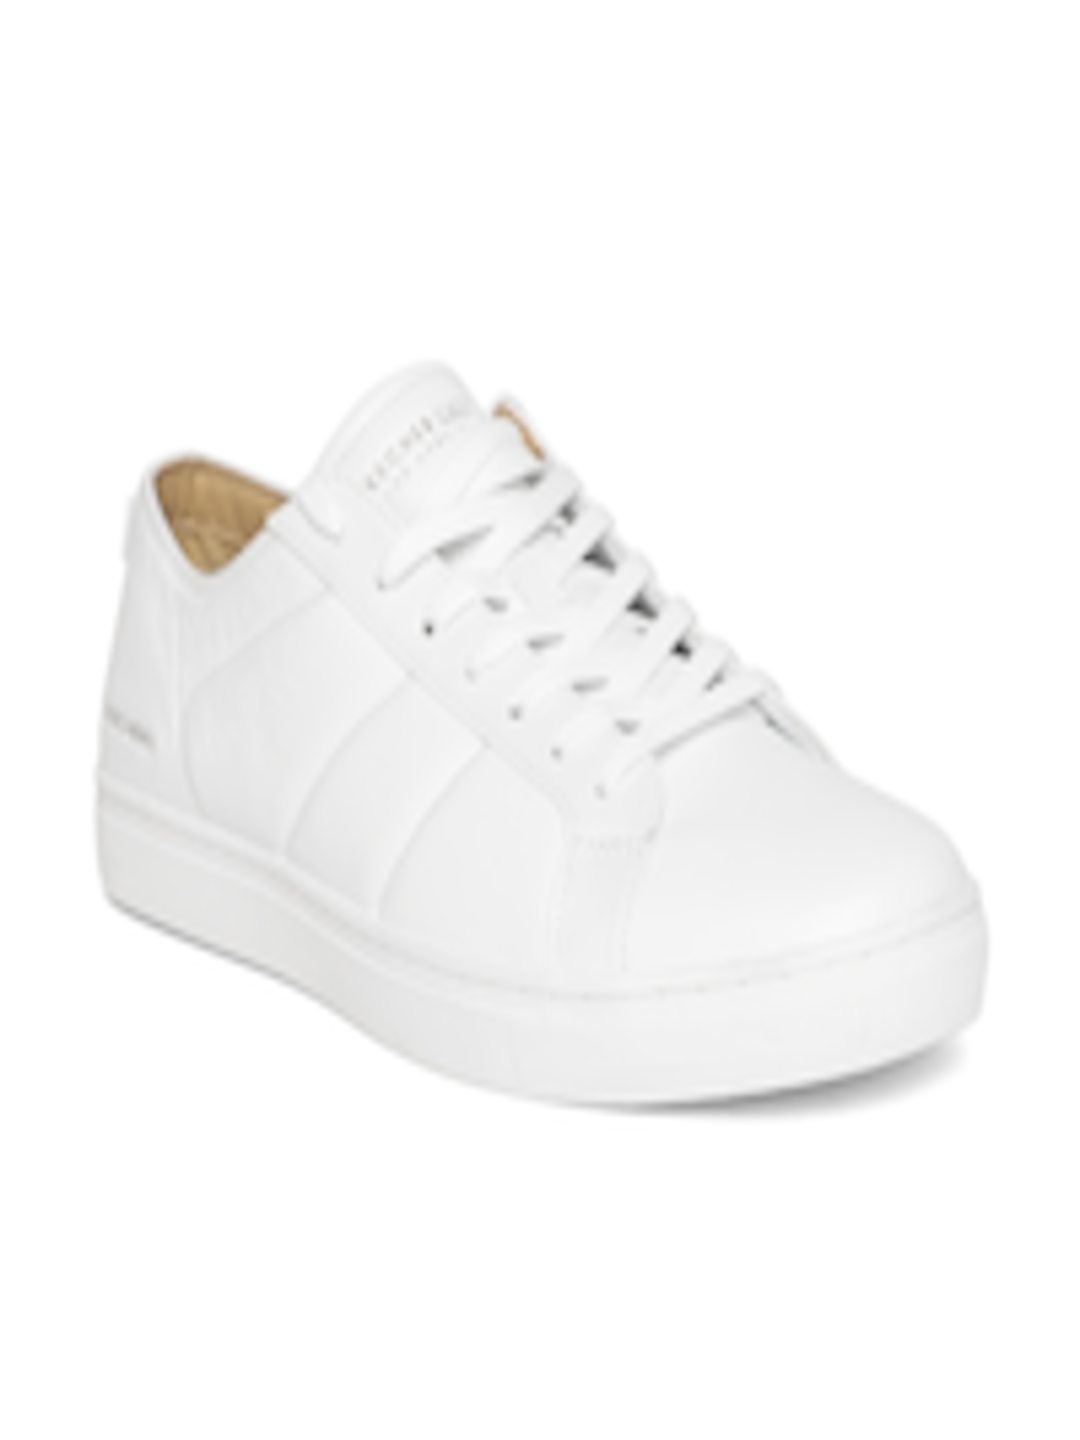 Buy Skechers Men White Venice T Sneakers - Casual Shoes for Men 8886019 ...